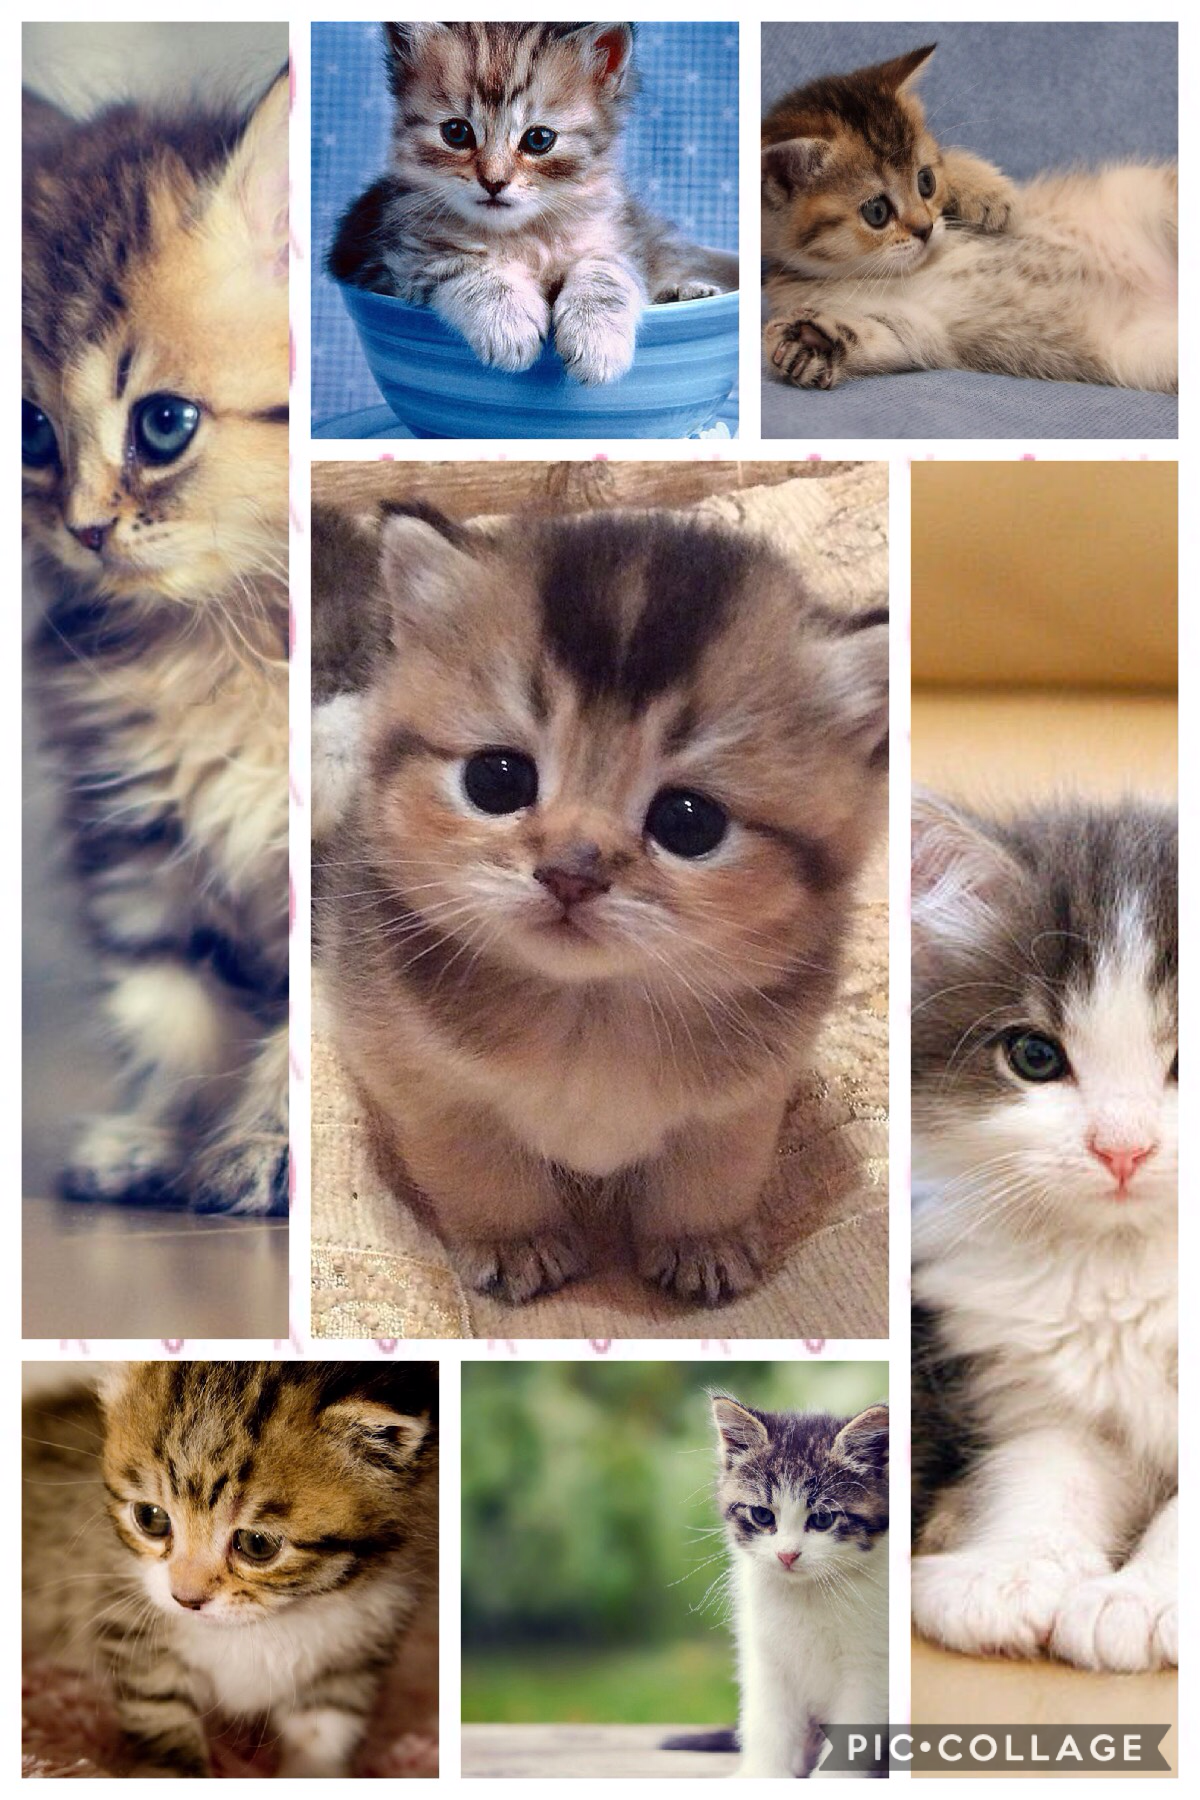 Kittens are sooo cute! 😘